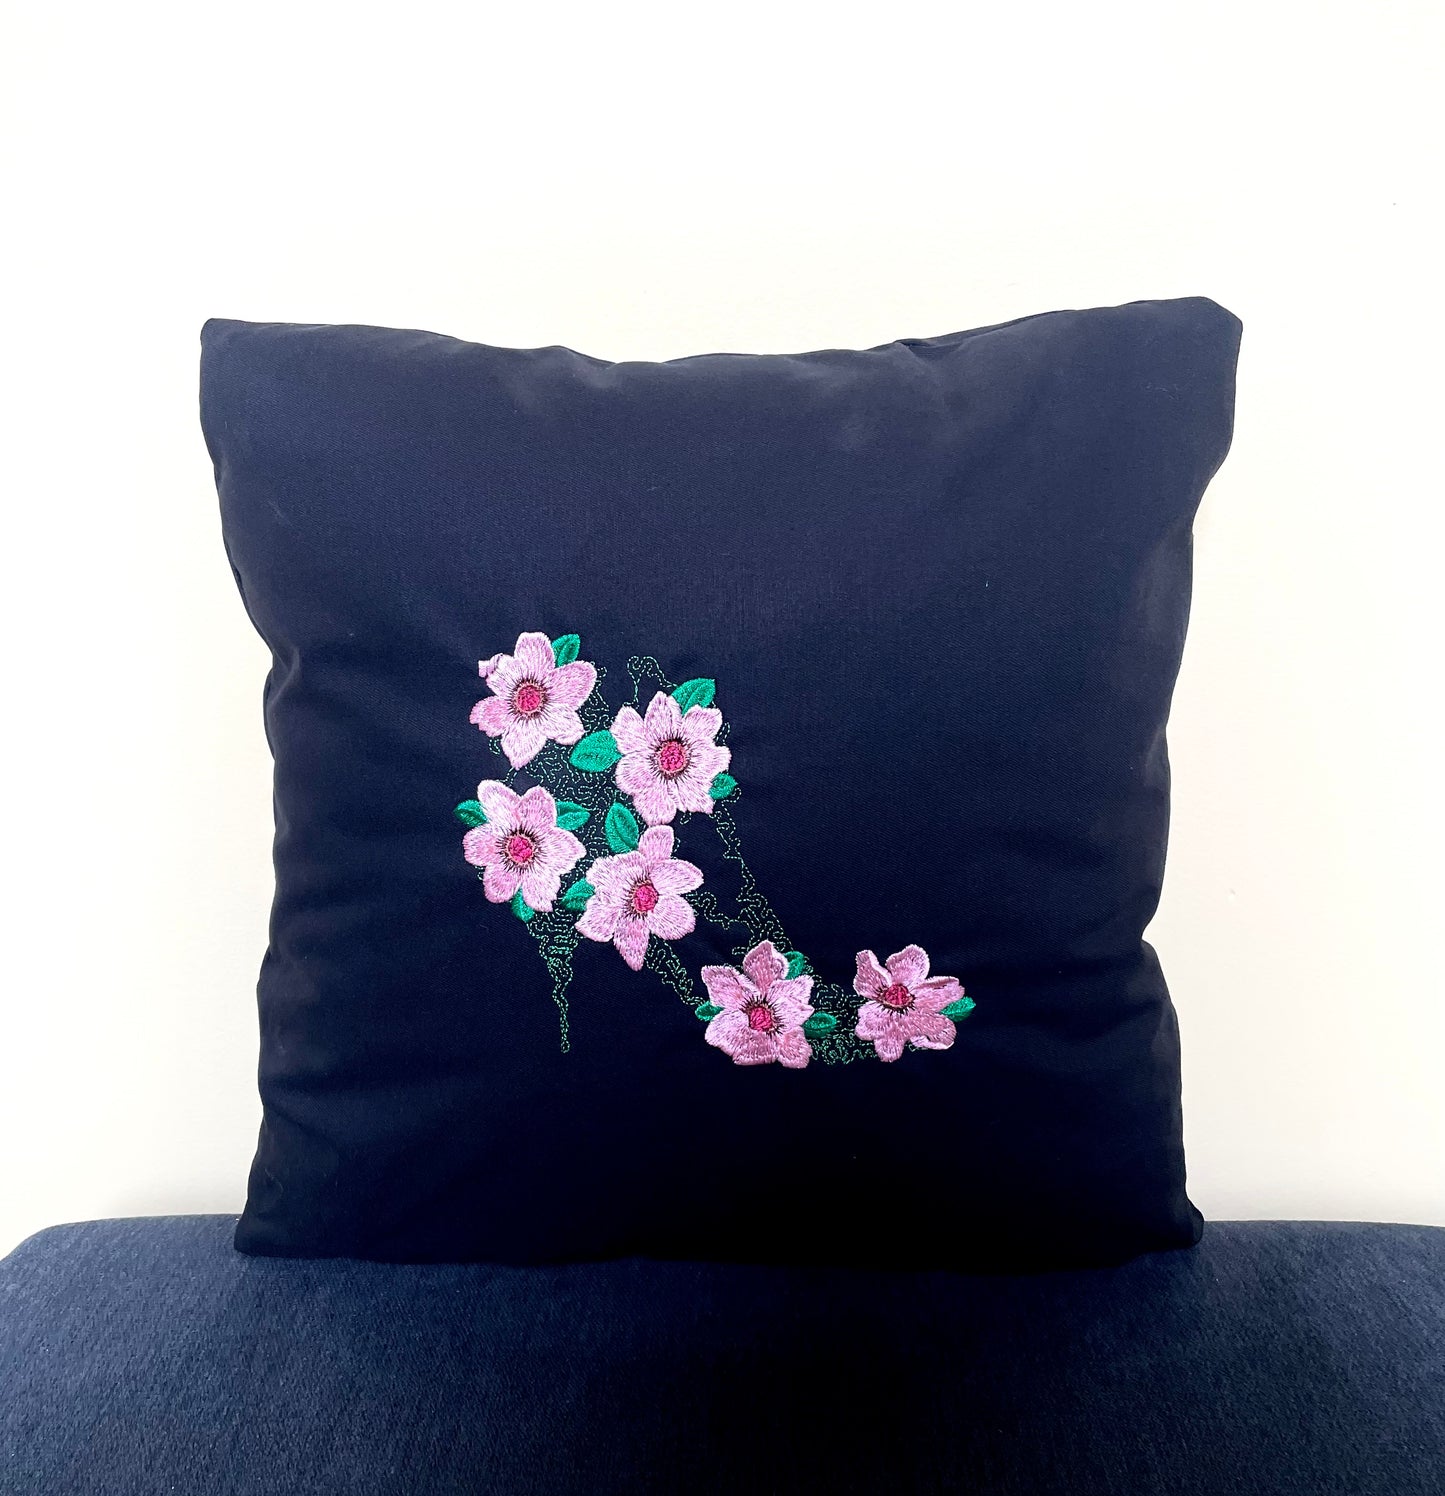 Embroidered Stiletto Flower Throw Pillow Cover 16" x 16" Cotton